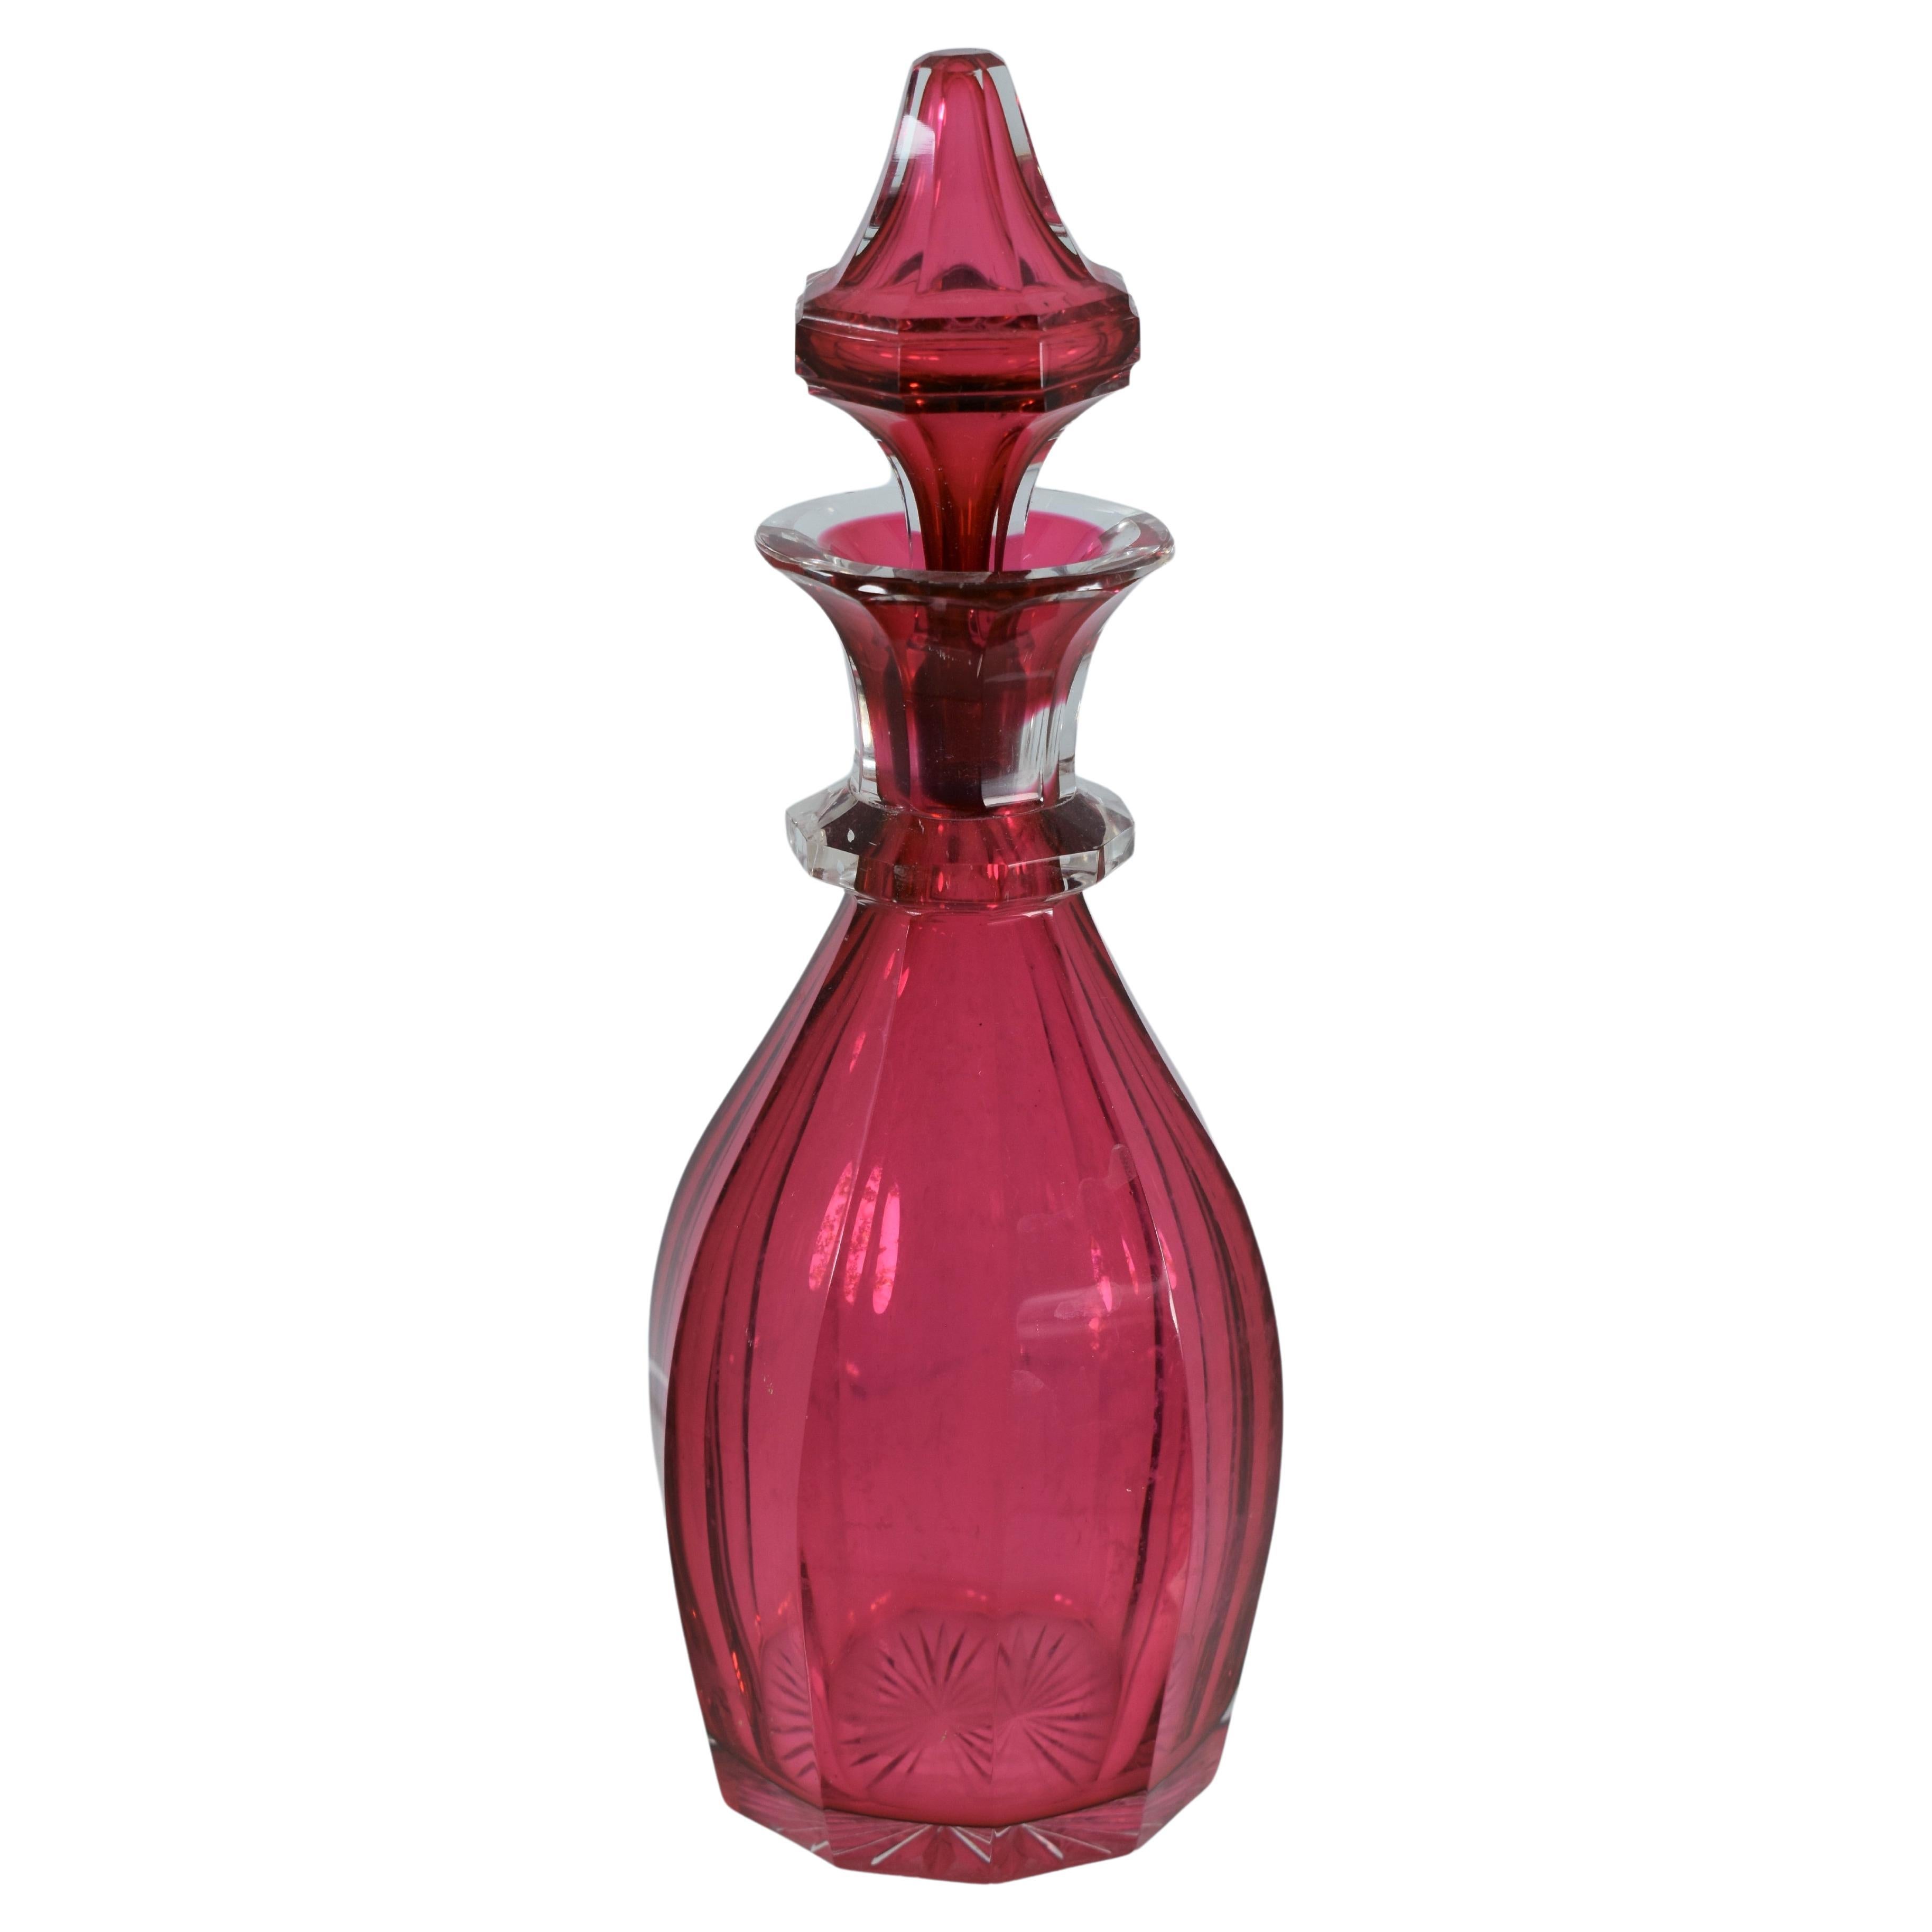 Cranberry glass perfume bottle.
Bohemia, 19th Century.
Measures: 21 cm high.
 